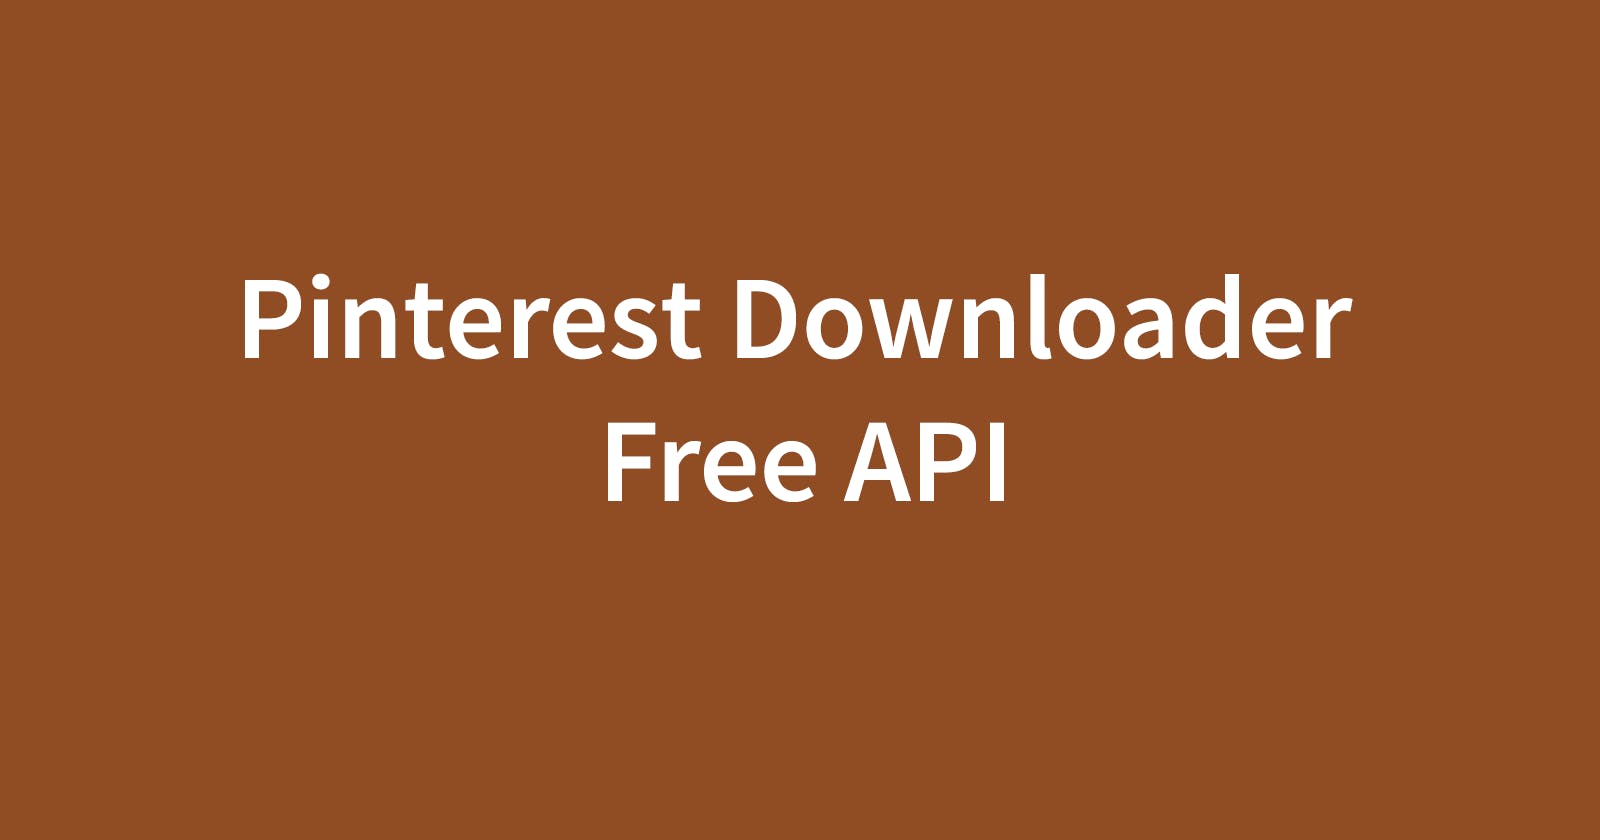 Pinterest Downloader Free API